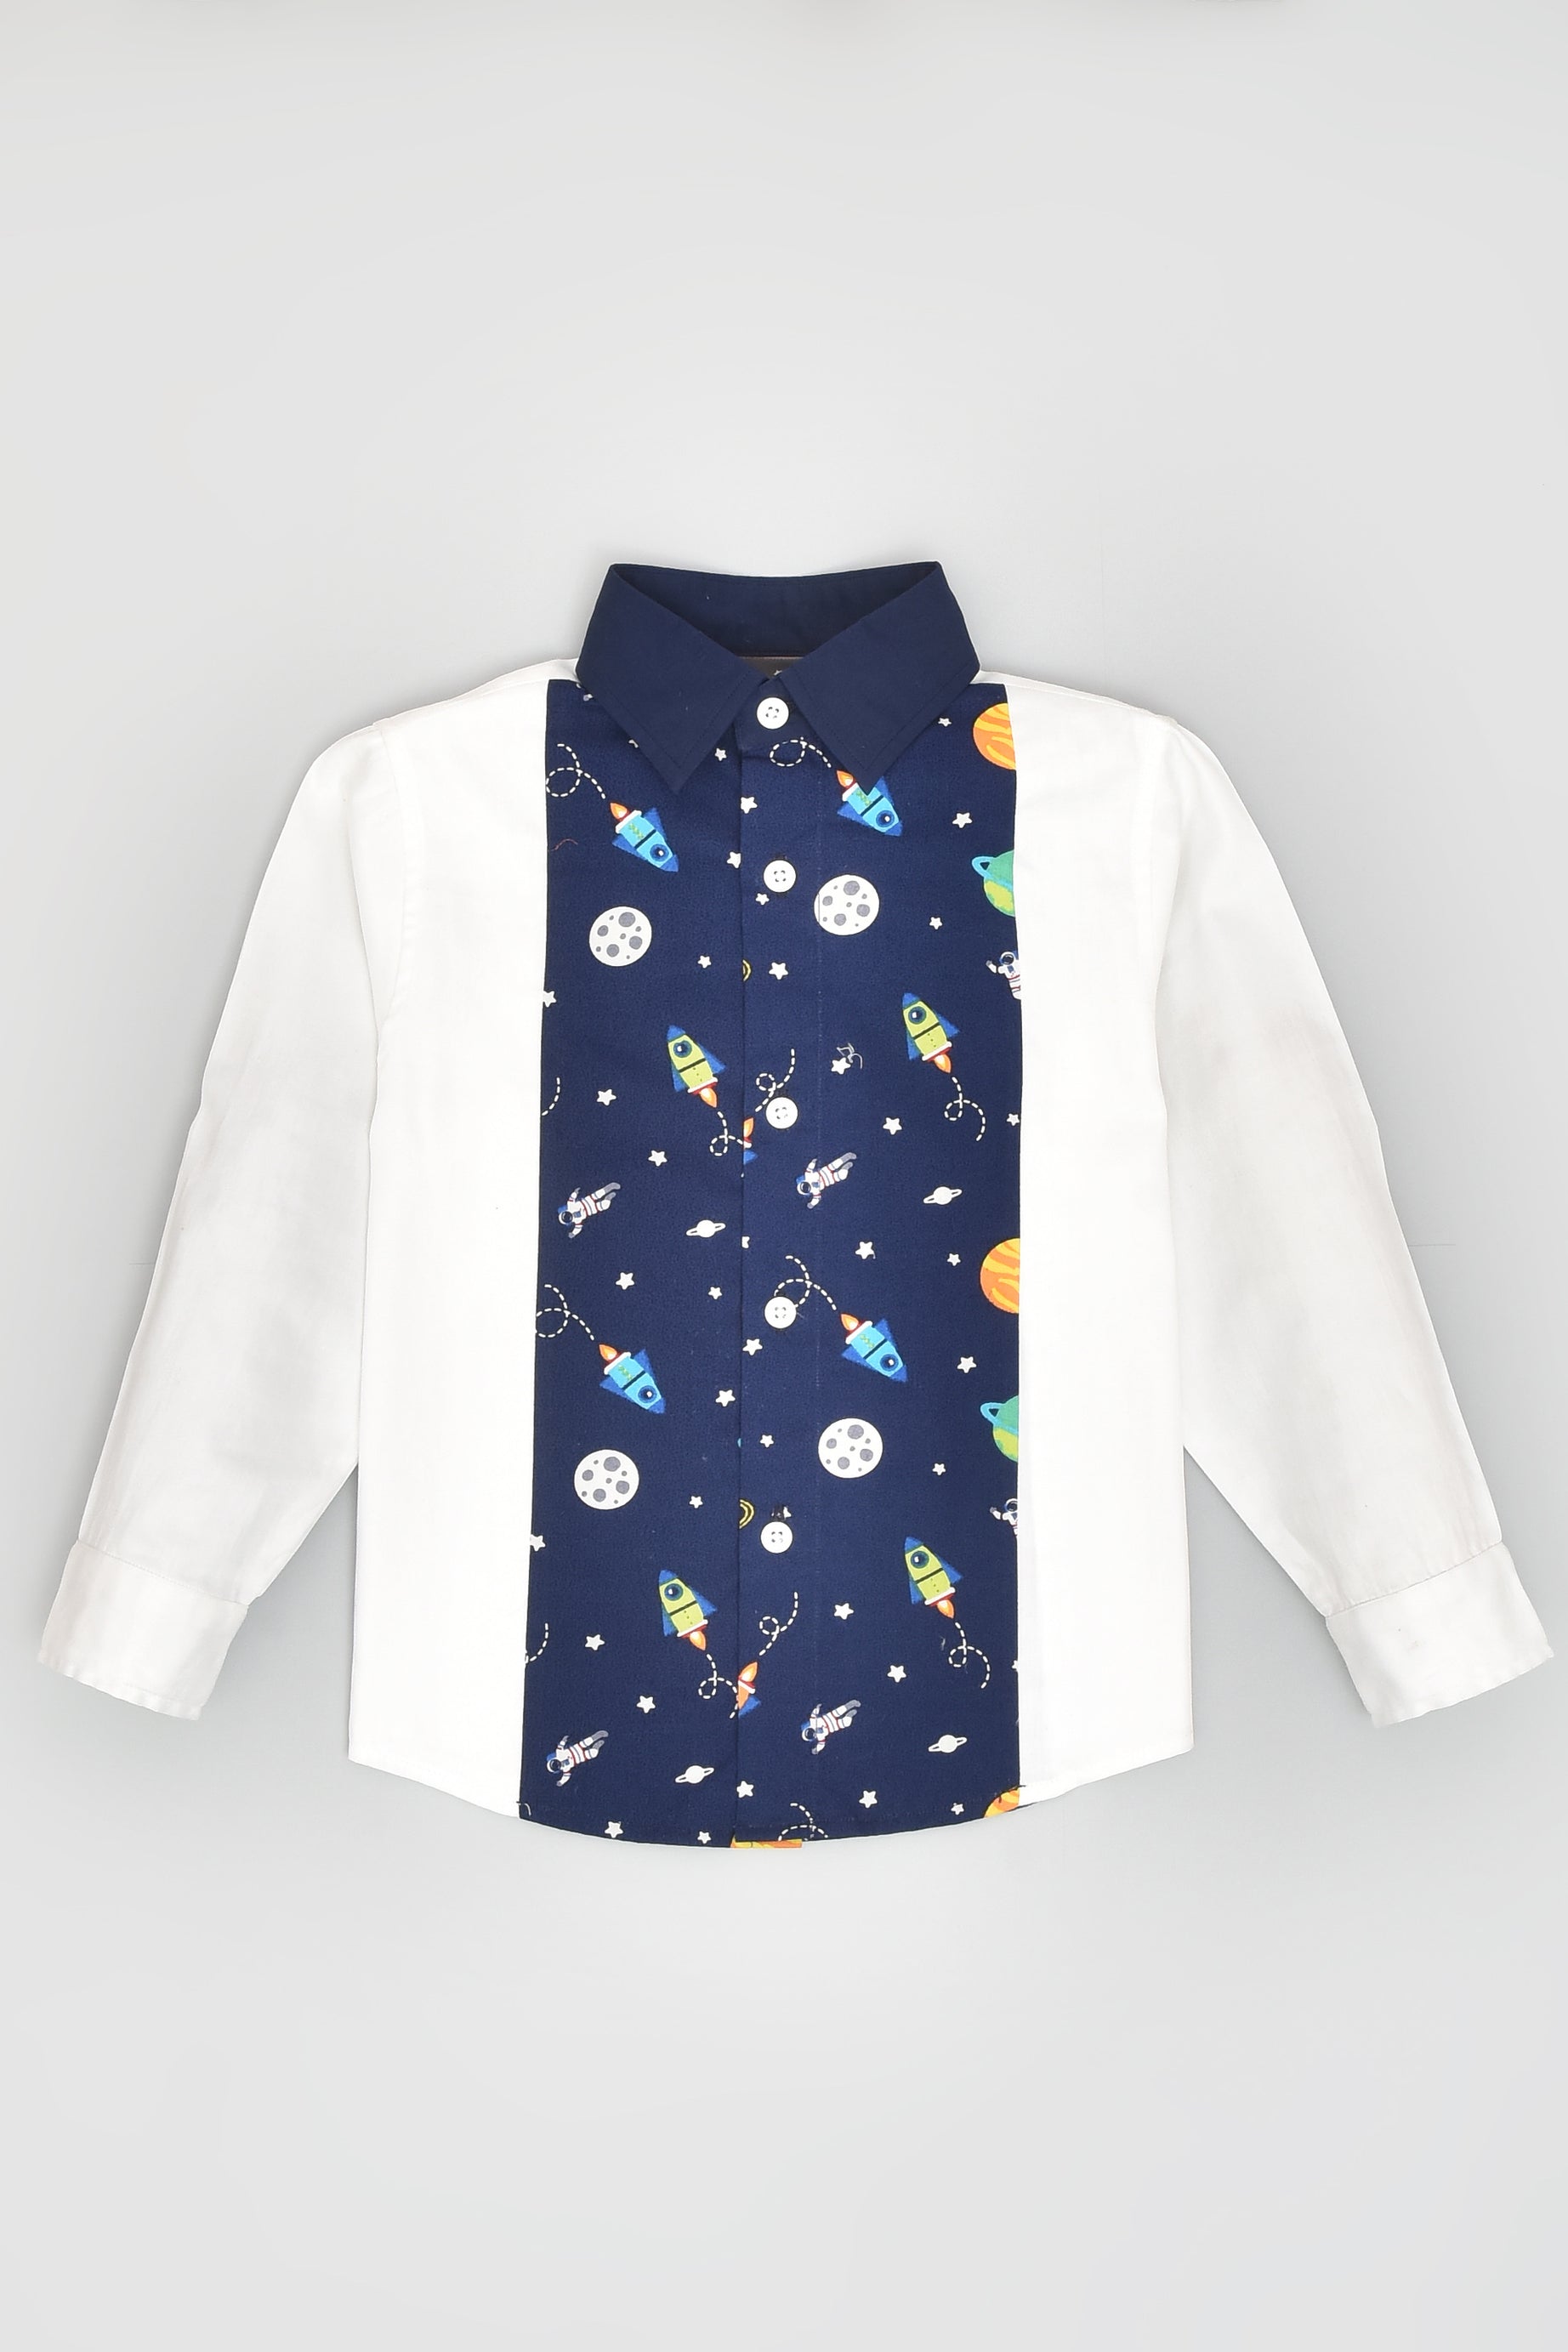 Space Paneled Shirt